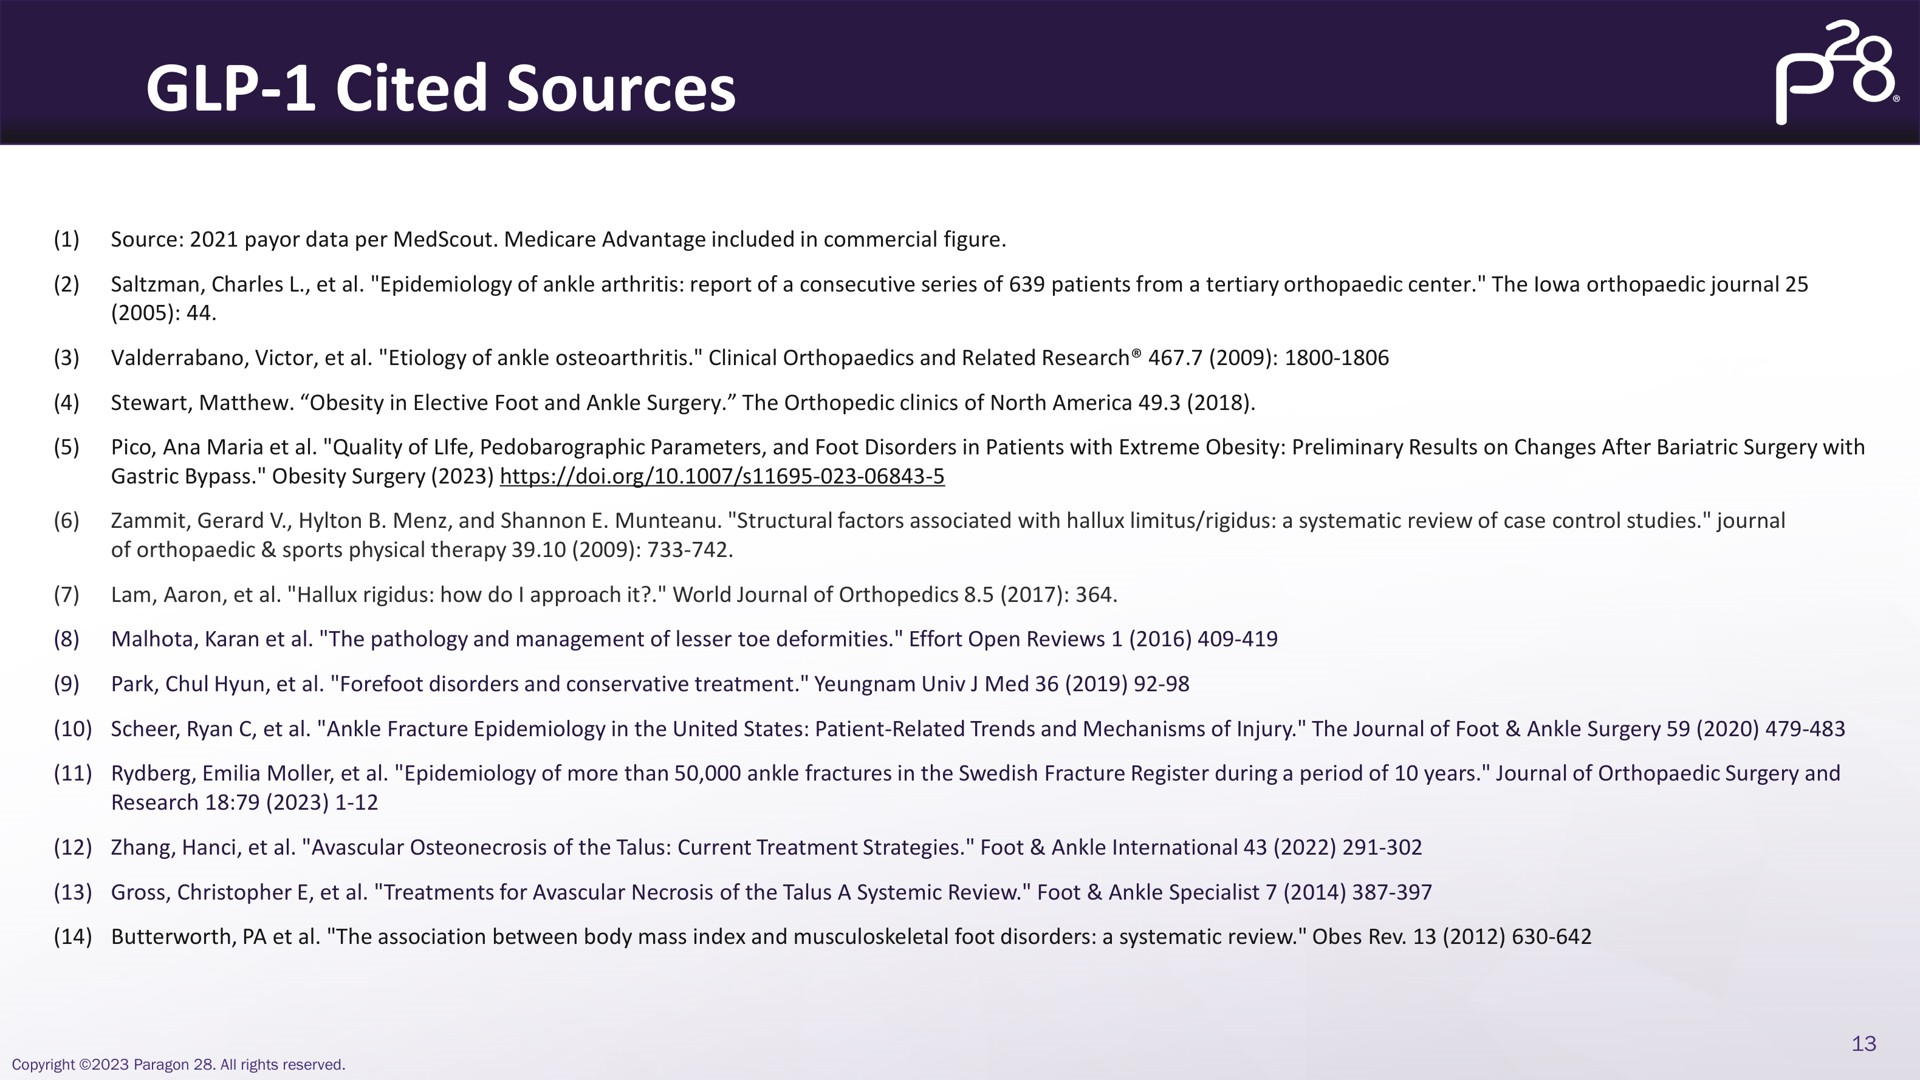 cited sources | Paragon28